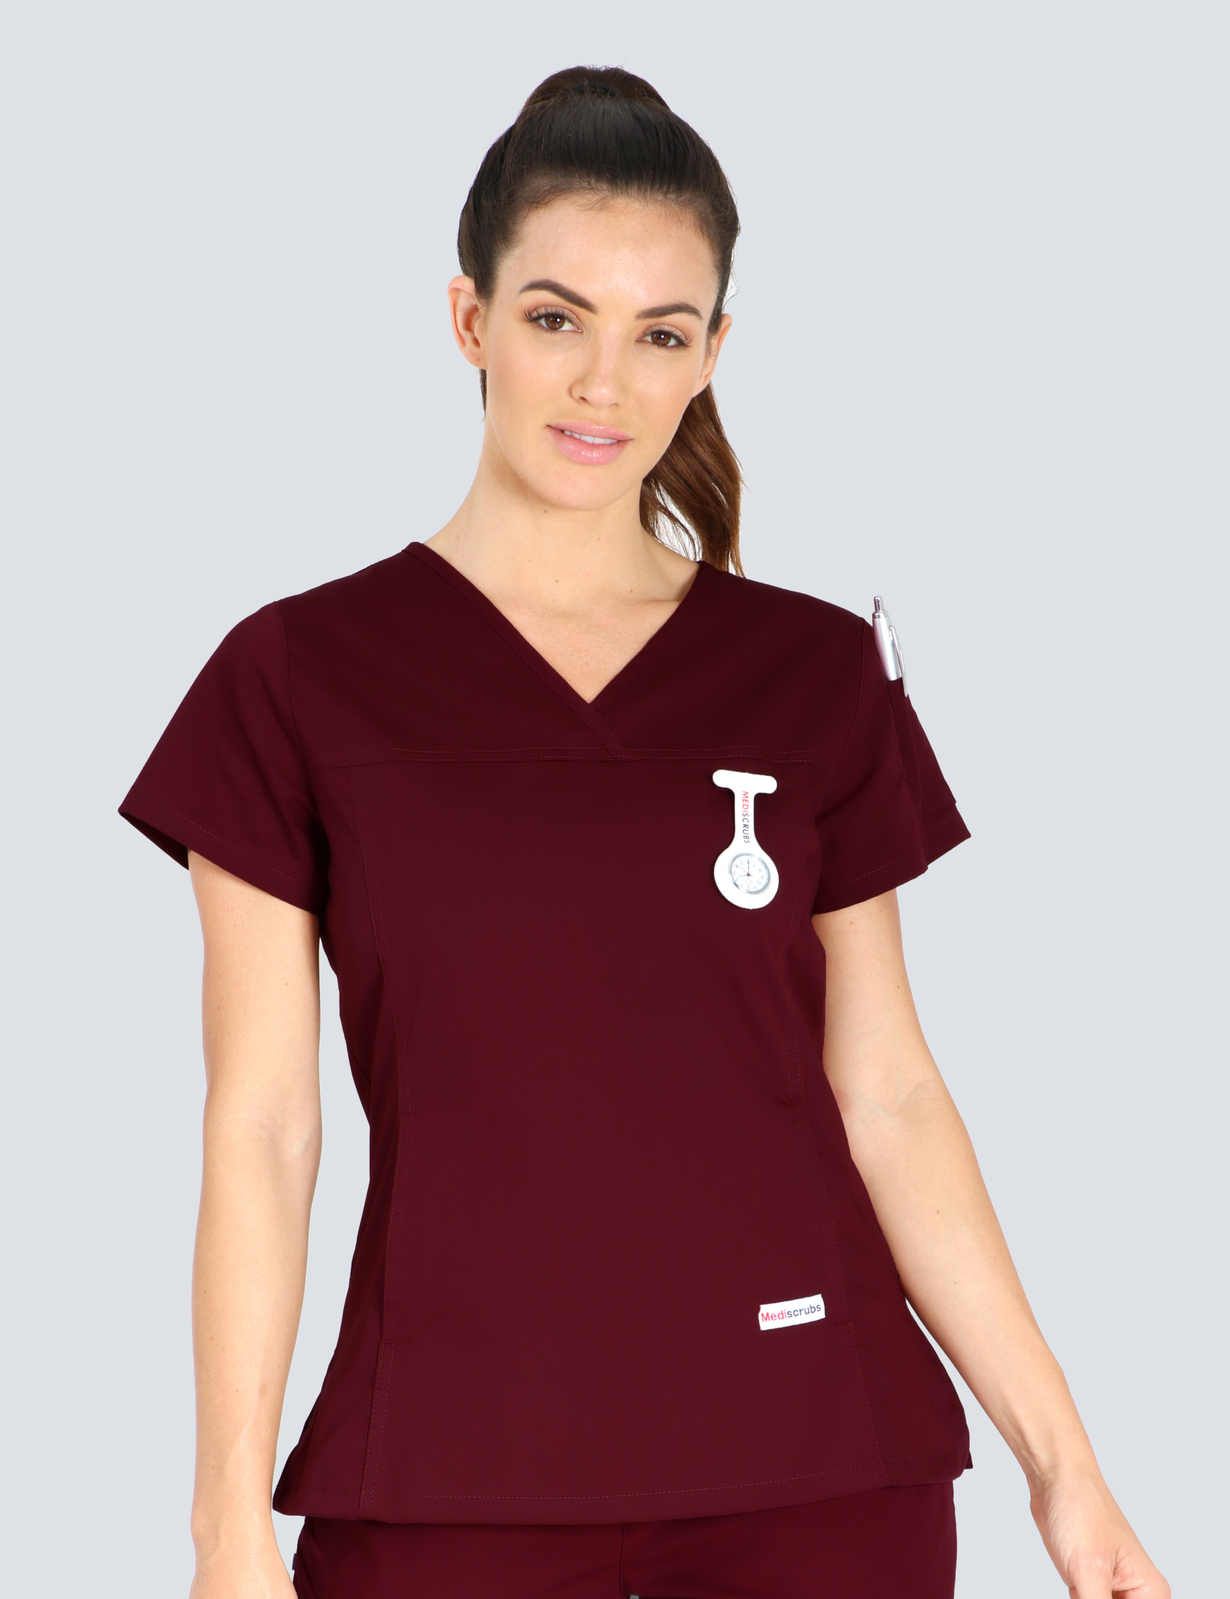 Queensland Children's Hospital Emergency Department Senior Medical Officer Uniform Top Bundle  (Women's Fit Top in Burgundy  incl Logos)